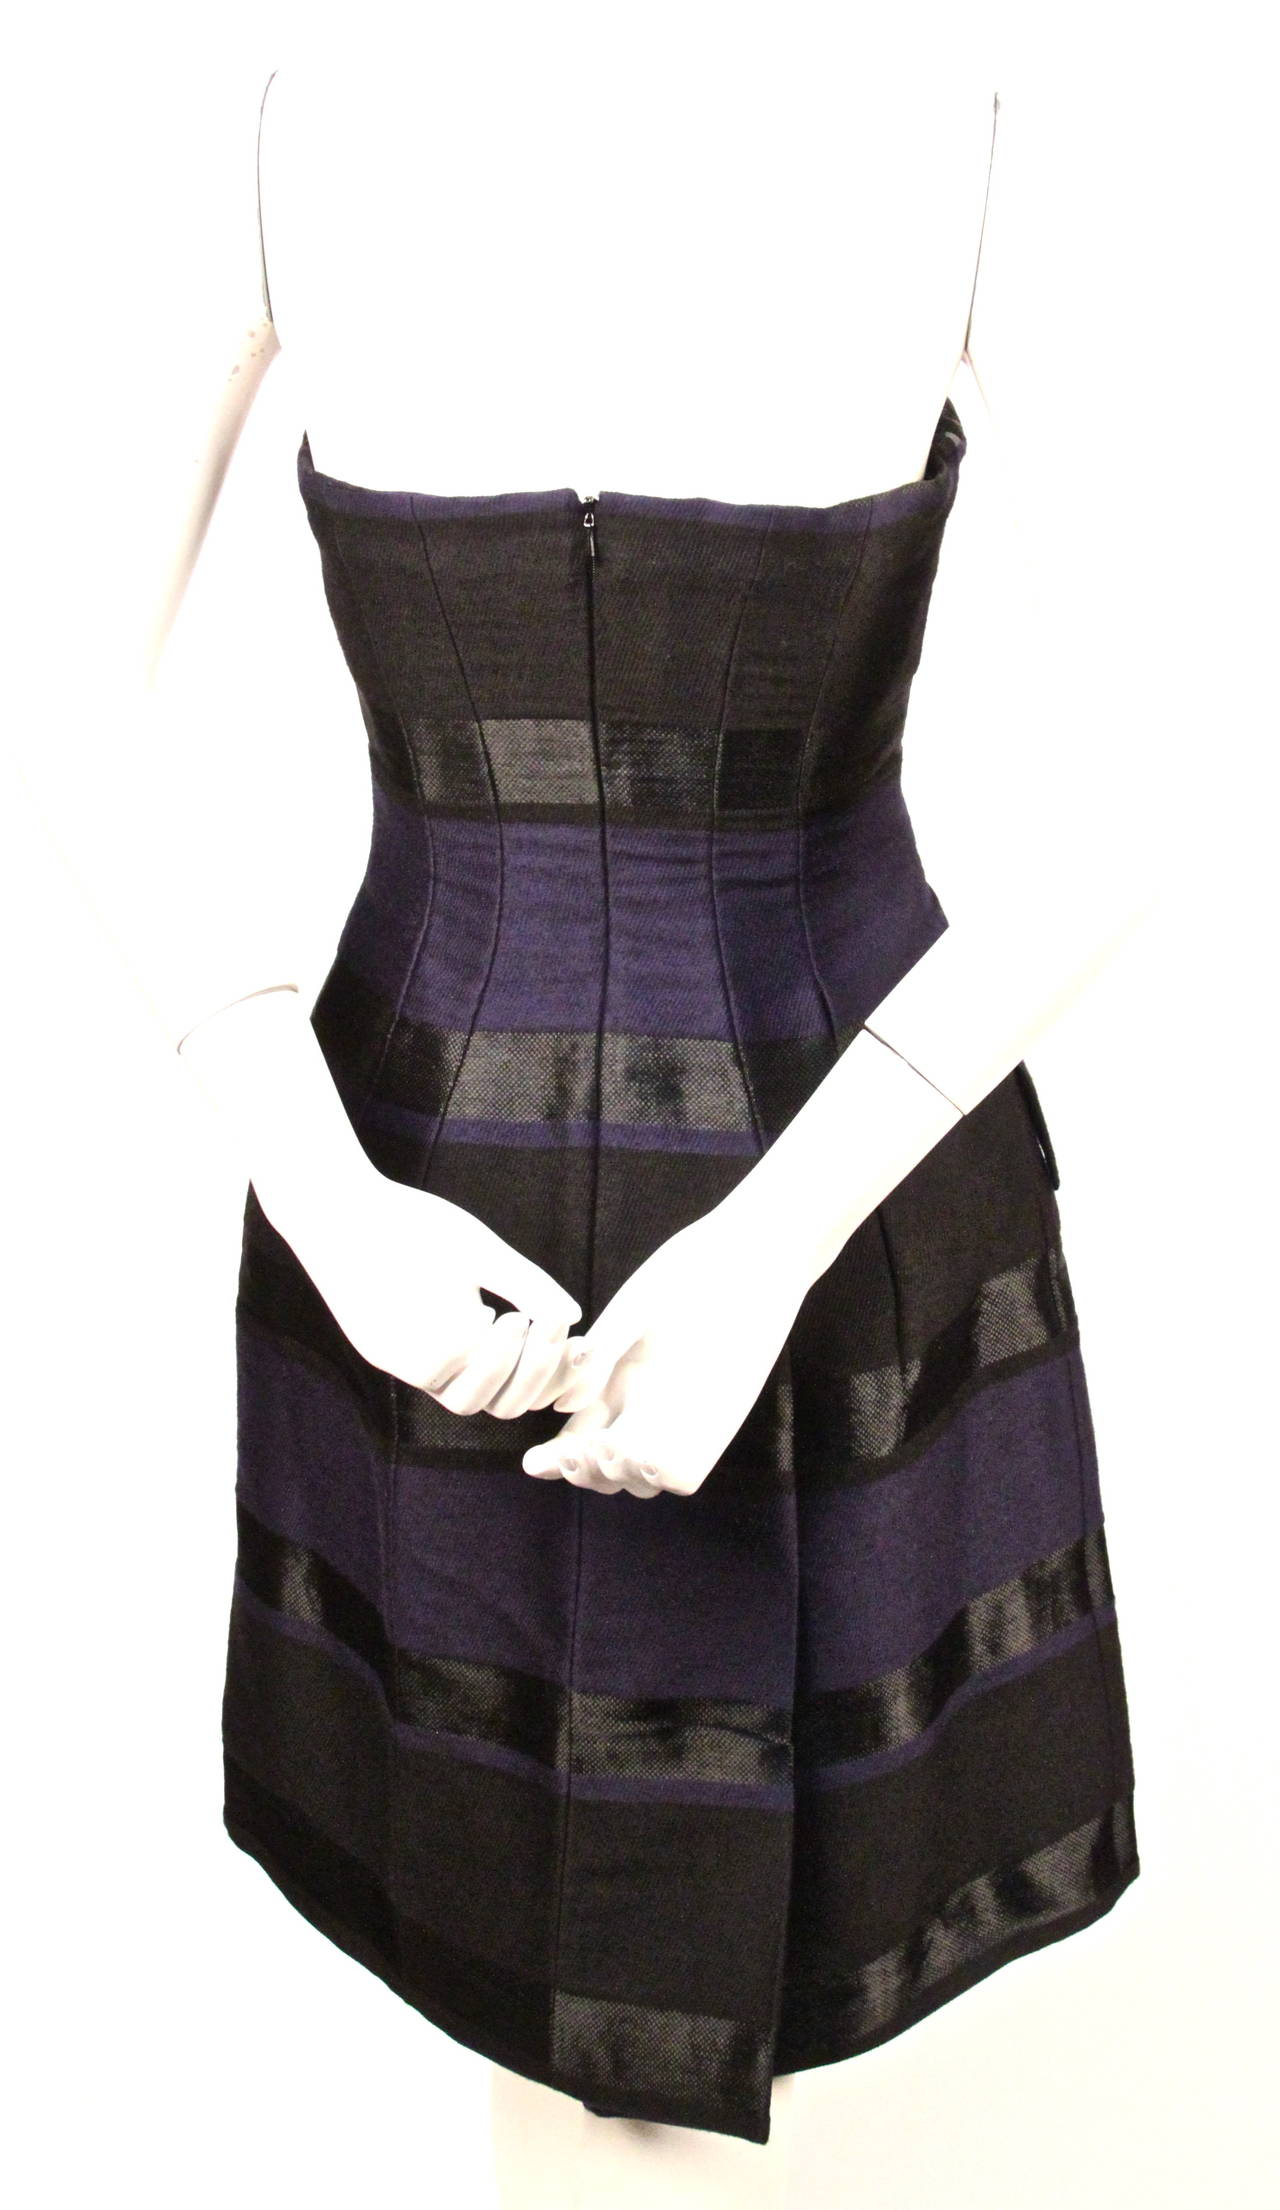 Black RAF SIMONS for CHRISTIAN DIOR strapless striped dress pre-fall 2013